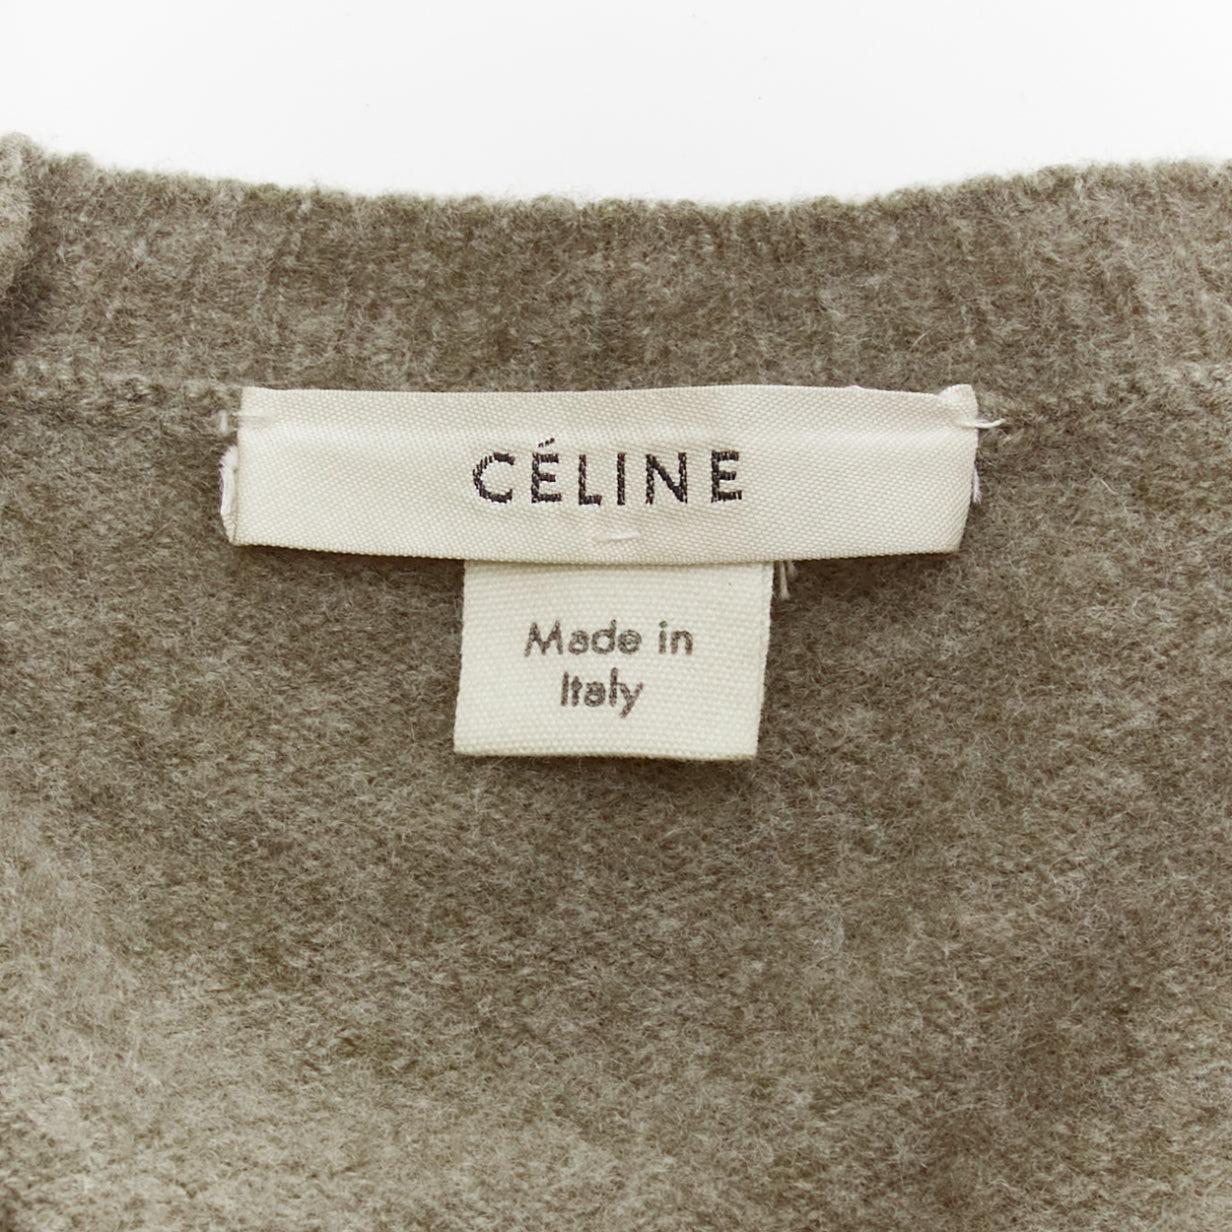 OLD CELINE Phoebe Philo 2018 khaki 2 in 1 raglan sweater M 4